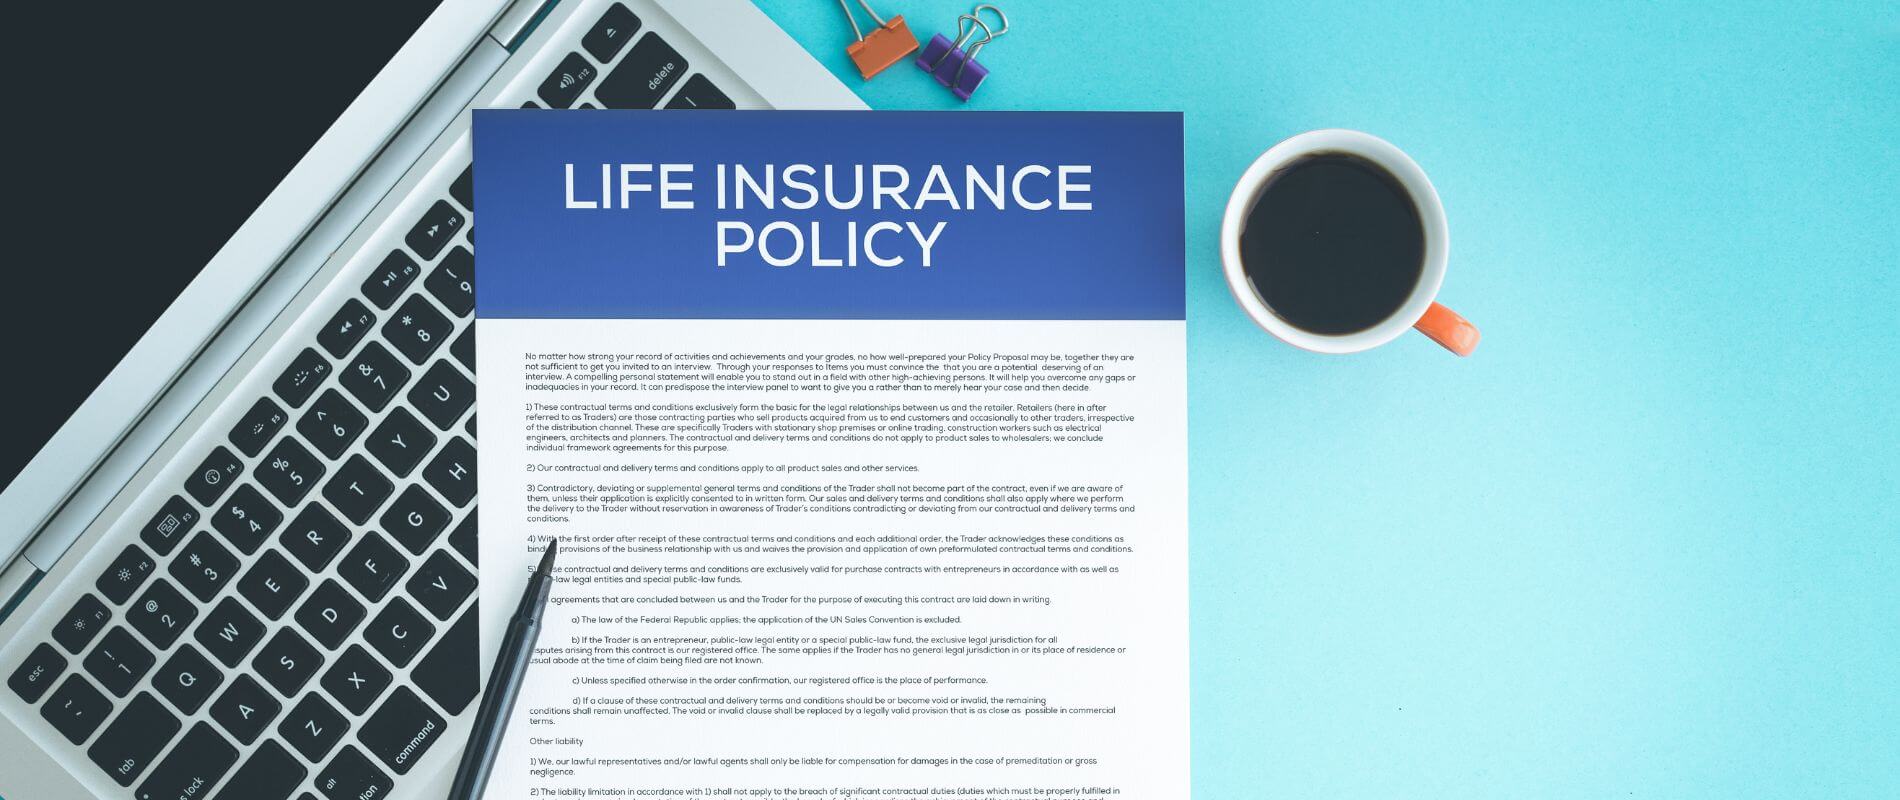 term life insurance